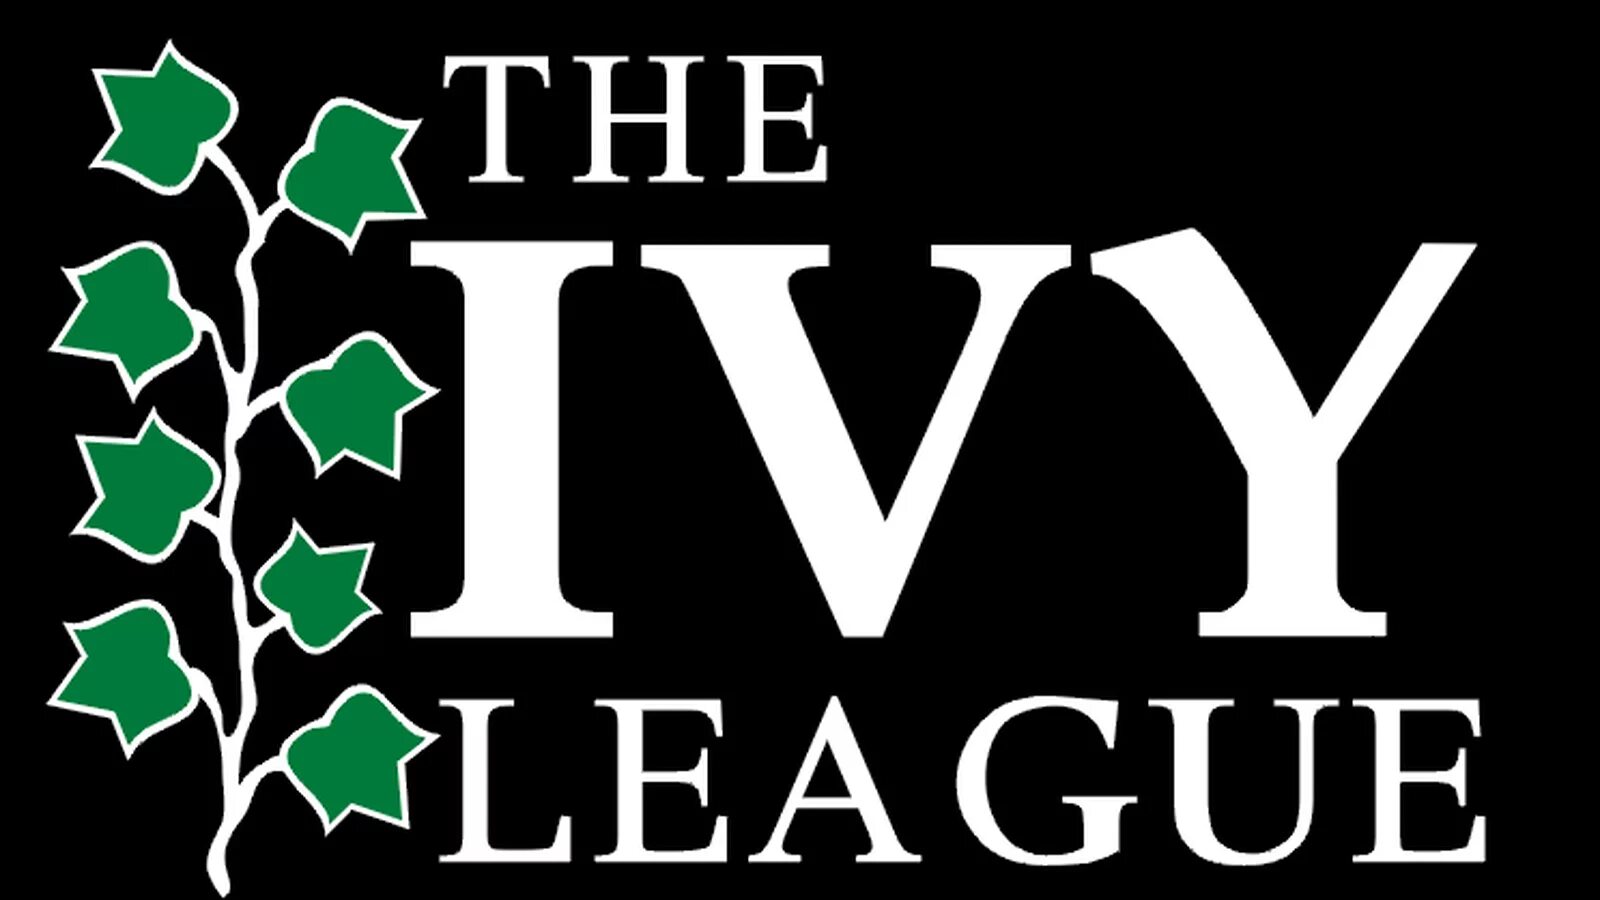 Лига плюща это. Лига плюща университеты. Школа Лиги плюща. Лига плюща логотип. Логотипы университетов Лиги плюща.